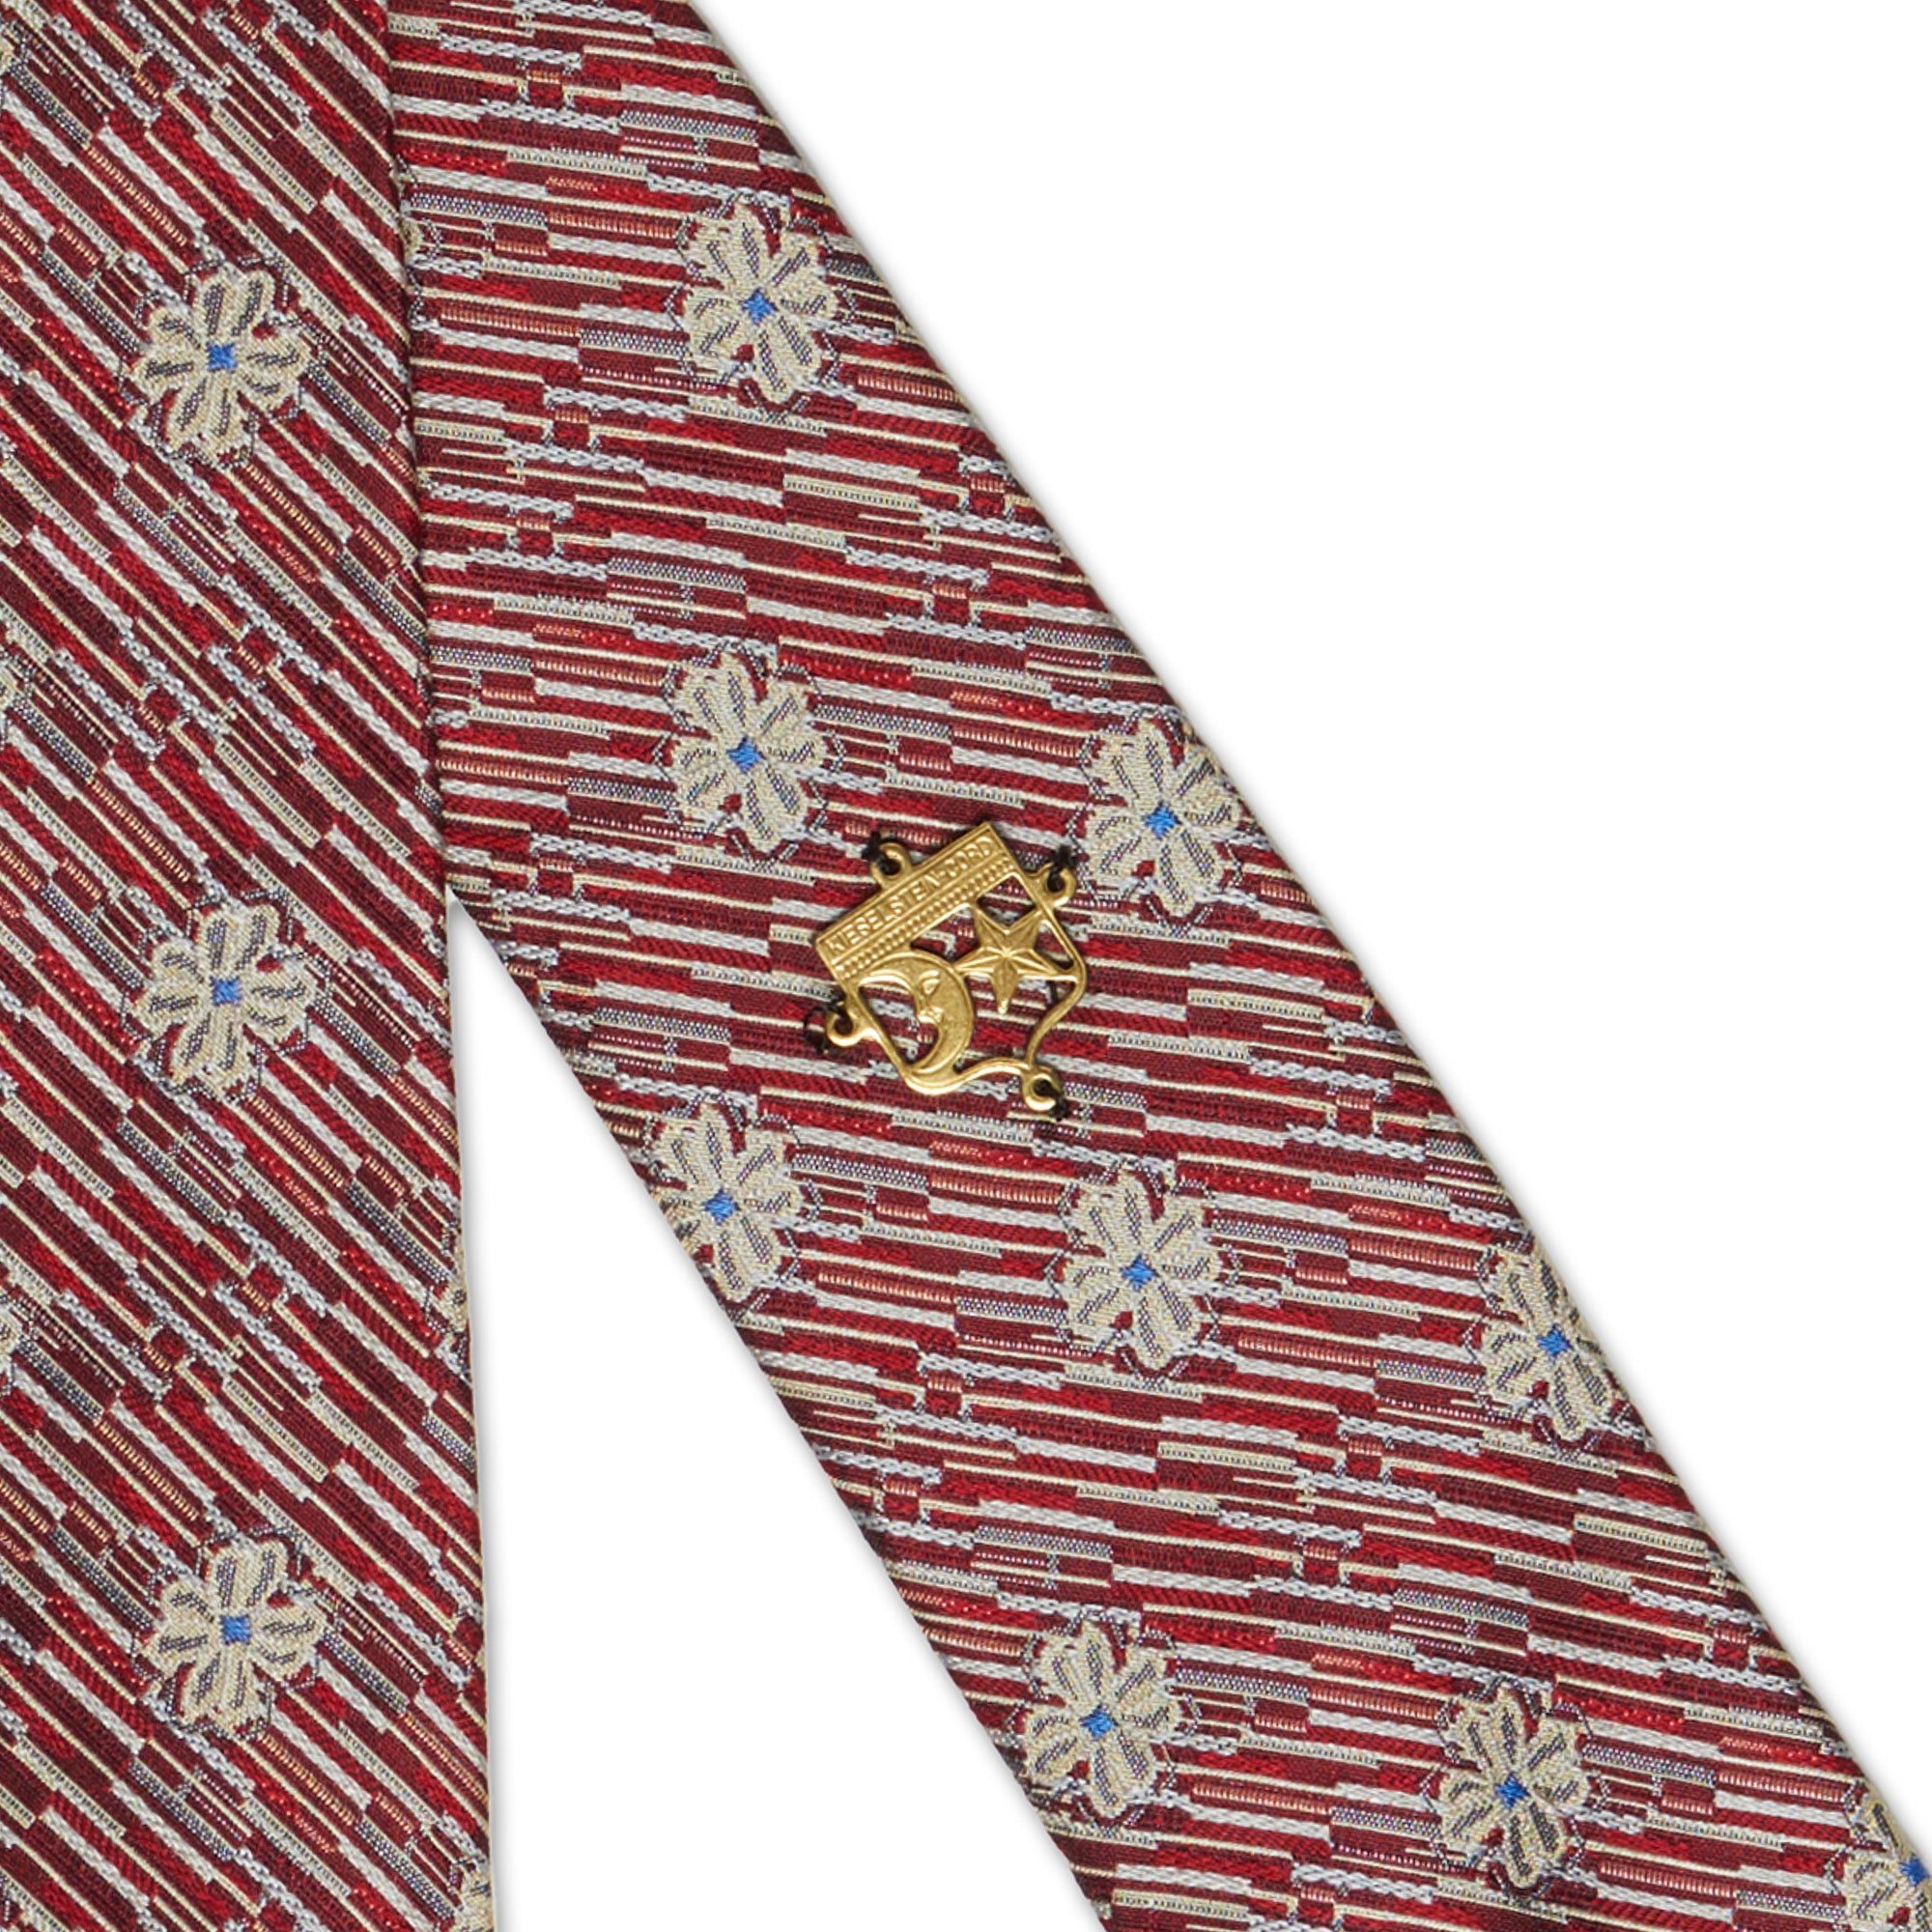 KIESELSTEIN-CORD Handmade Red Floral Design Silk Tie KIESELSTEIN-CORD